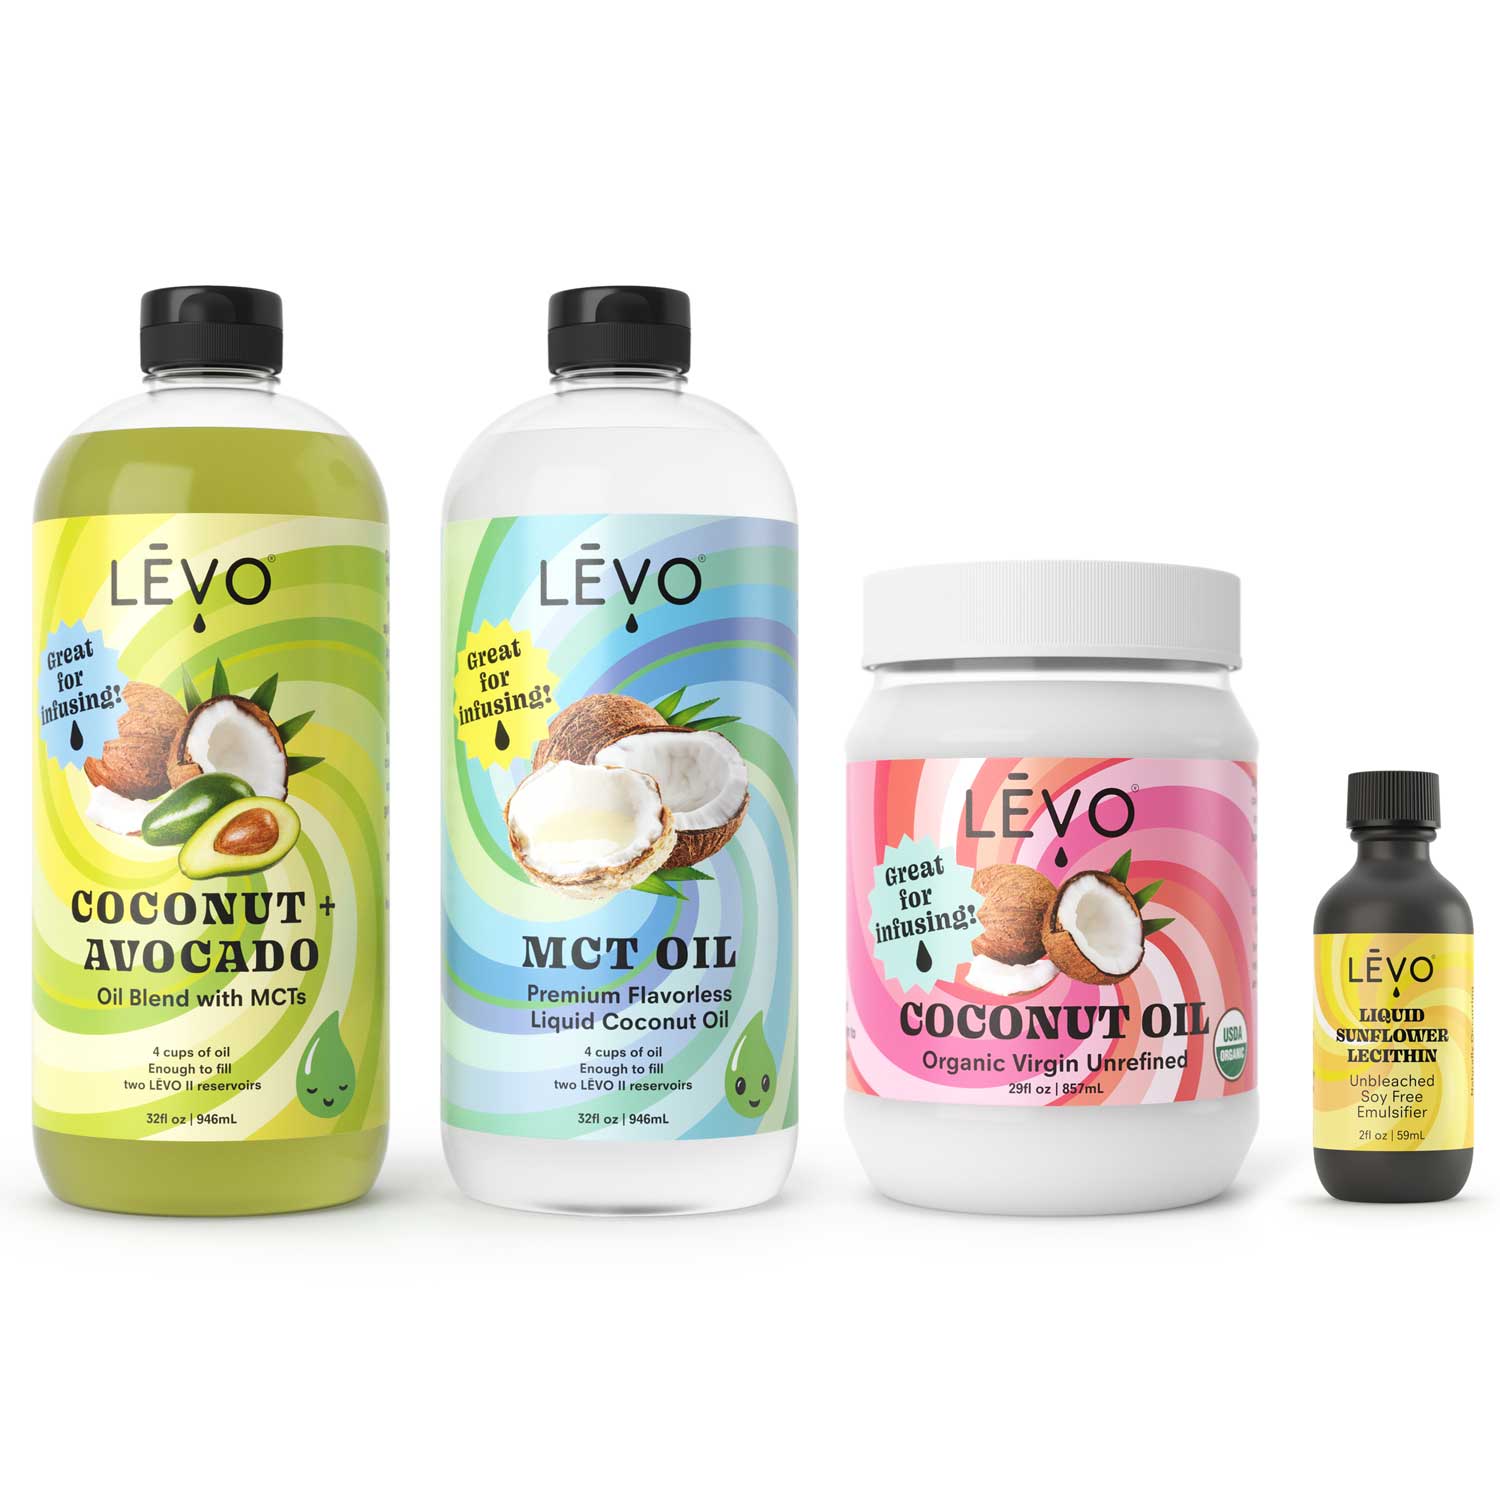 LEVO branded Coconut Avocado oil, MCT oil, Coconut oil, and lecithin